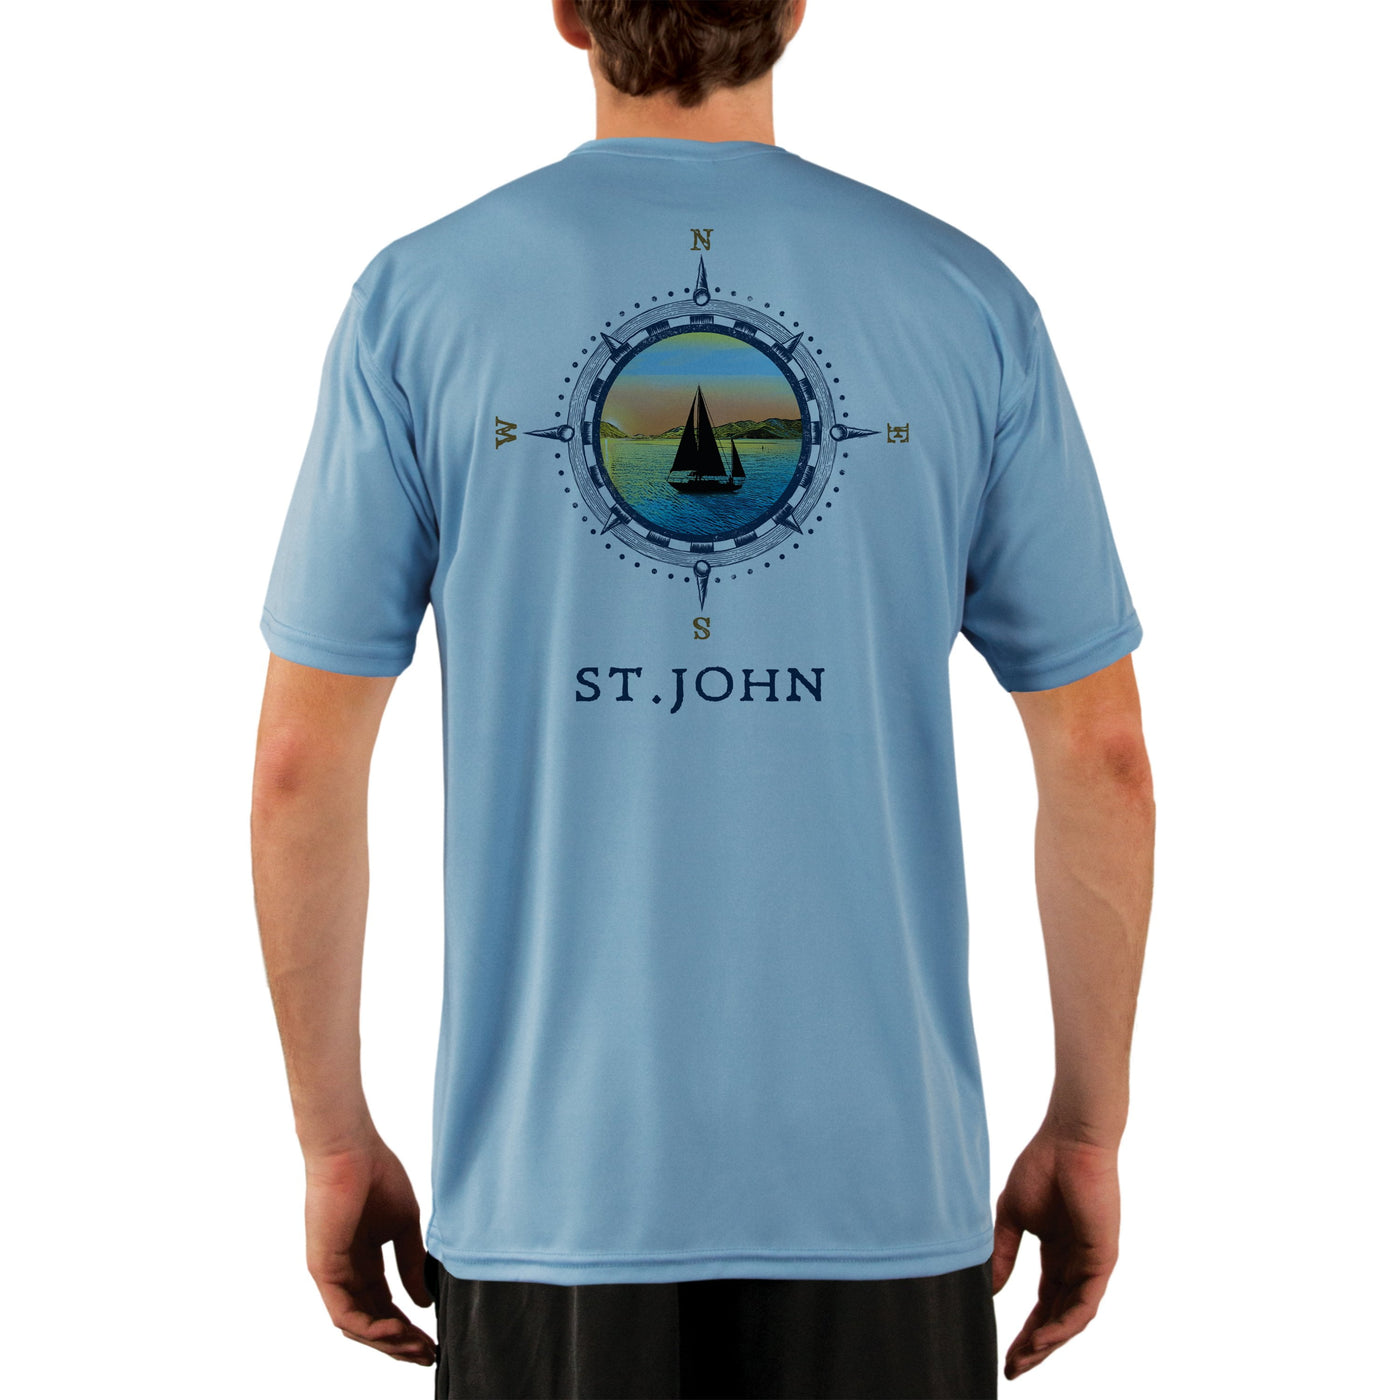 Compass Vintage St.John Men's UPF 50+ Short Sleeve T-shirt